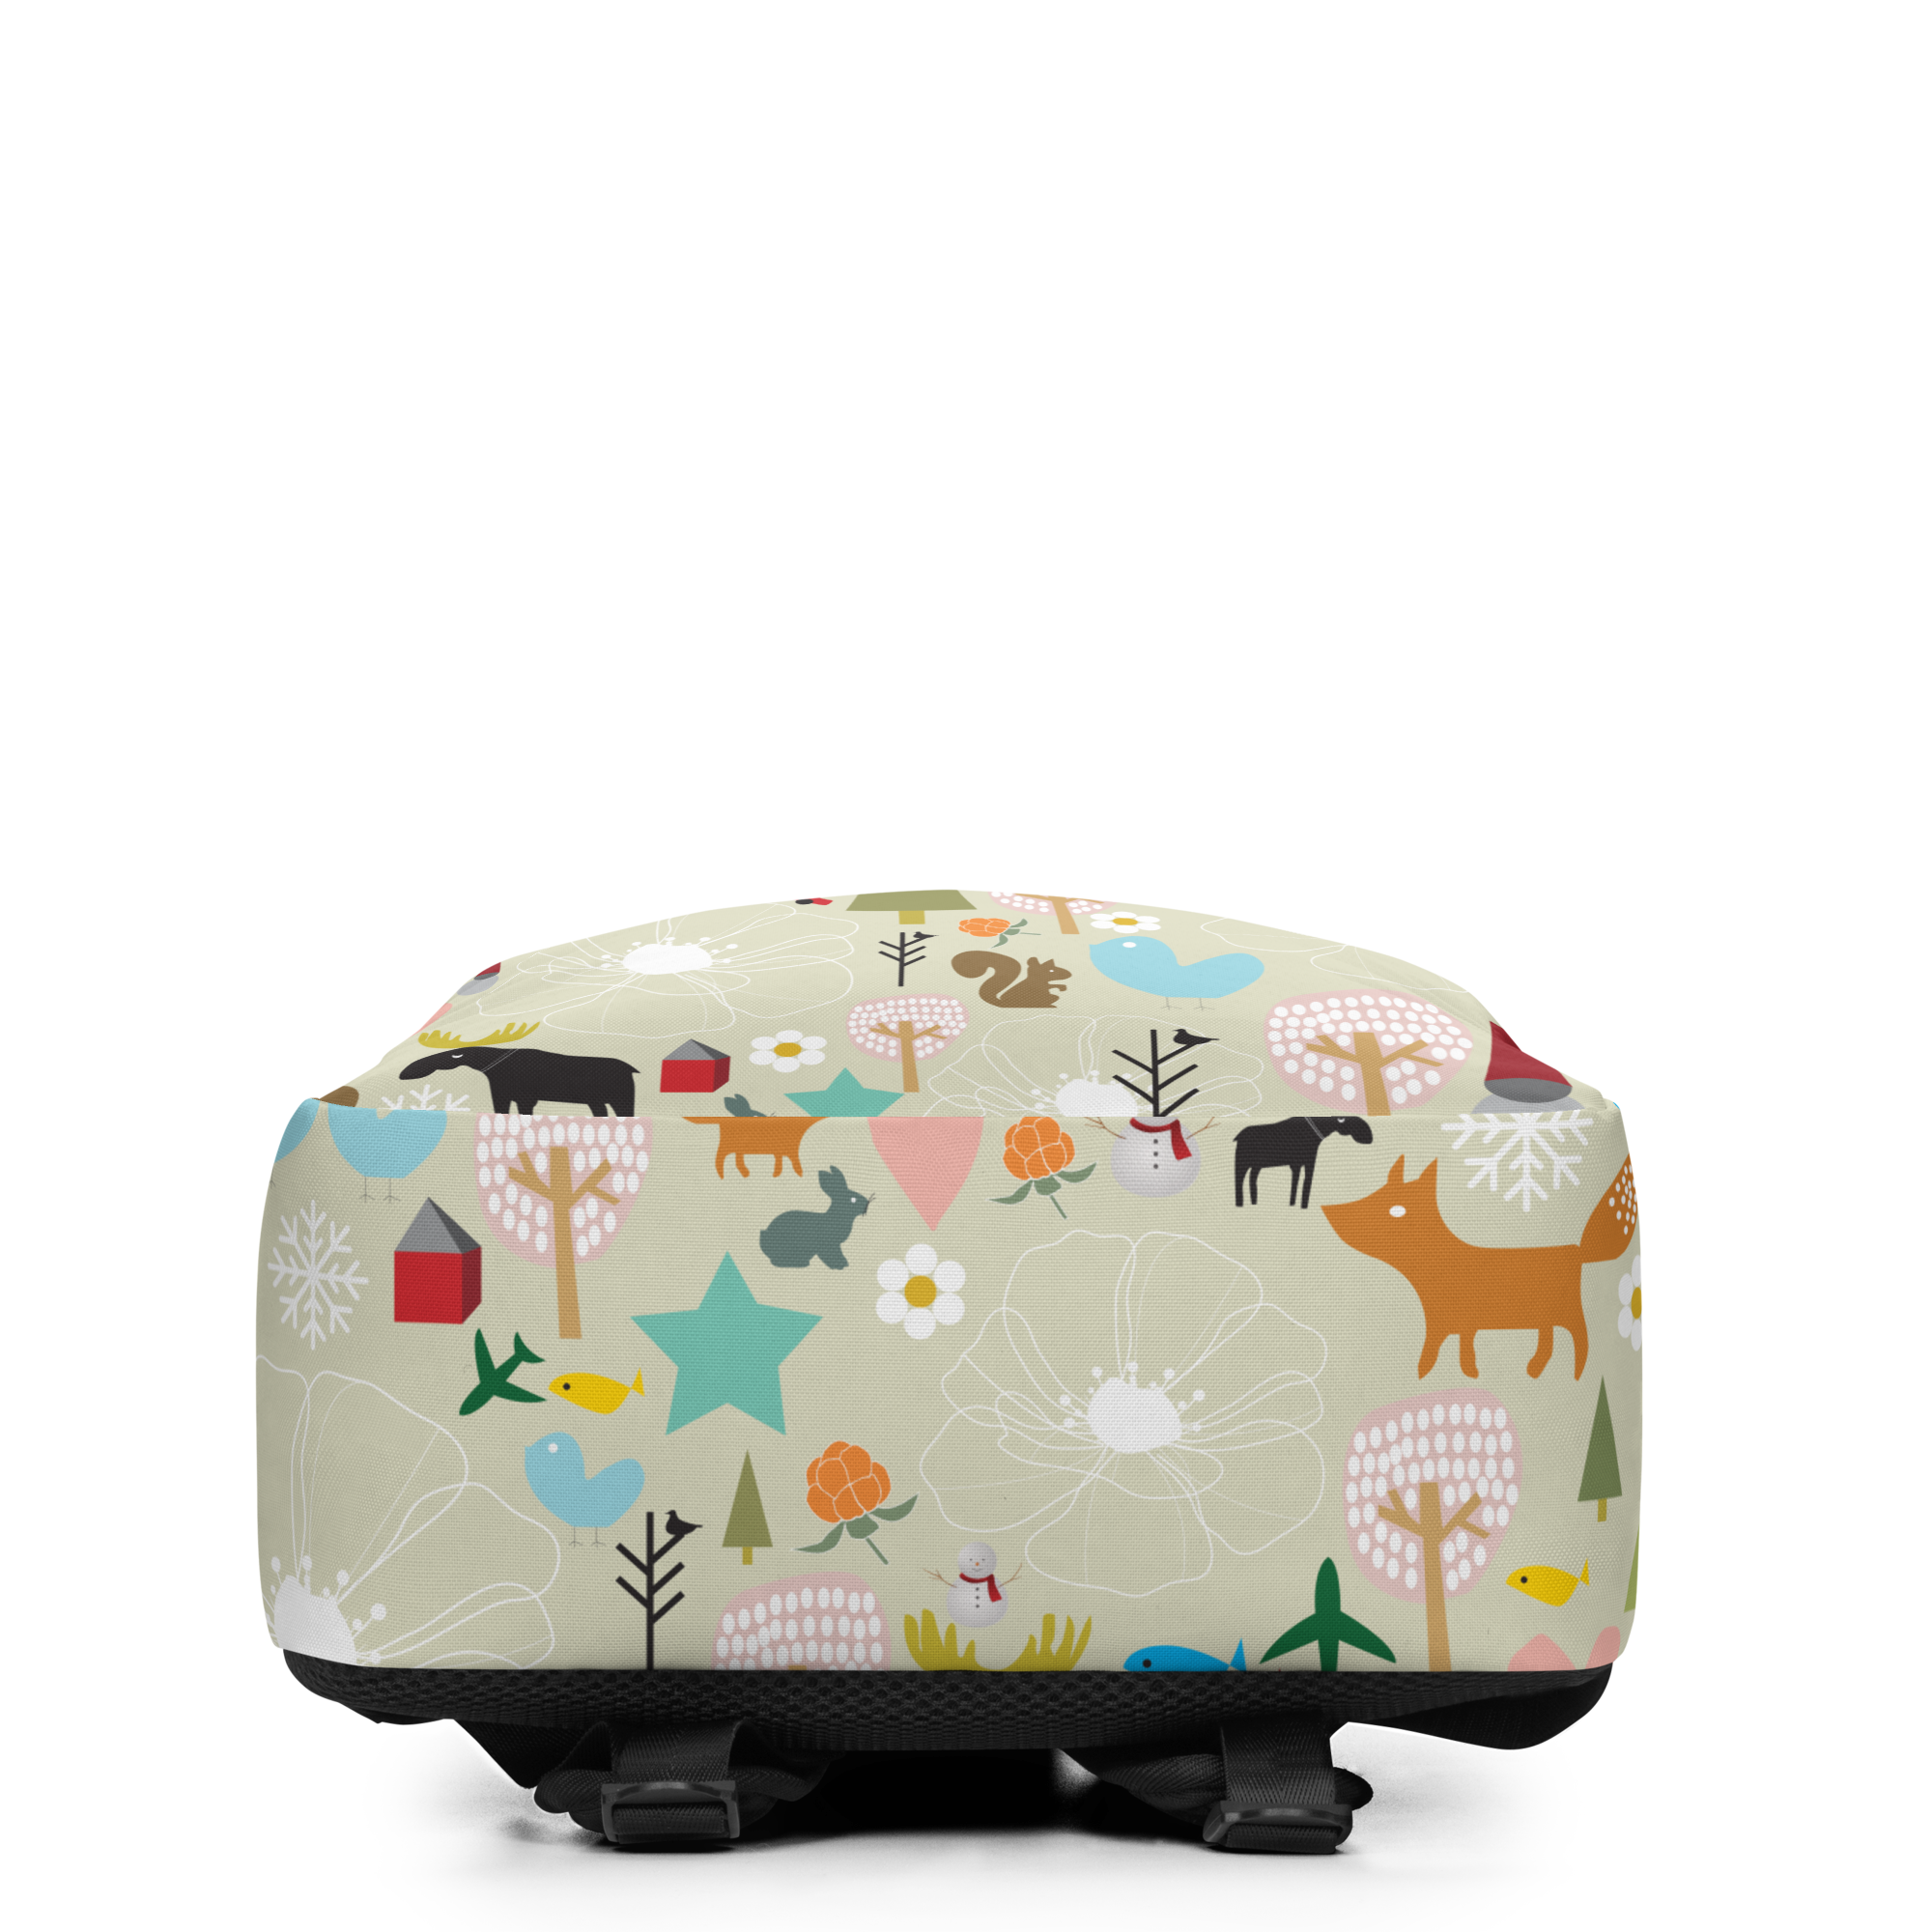 Baby Room Design | Minimalist Backpack